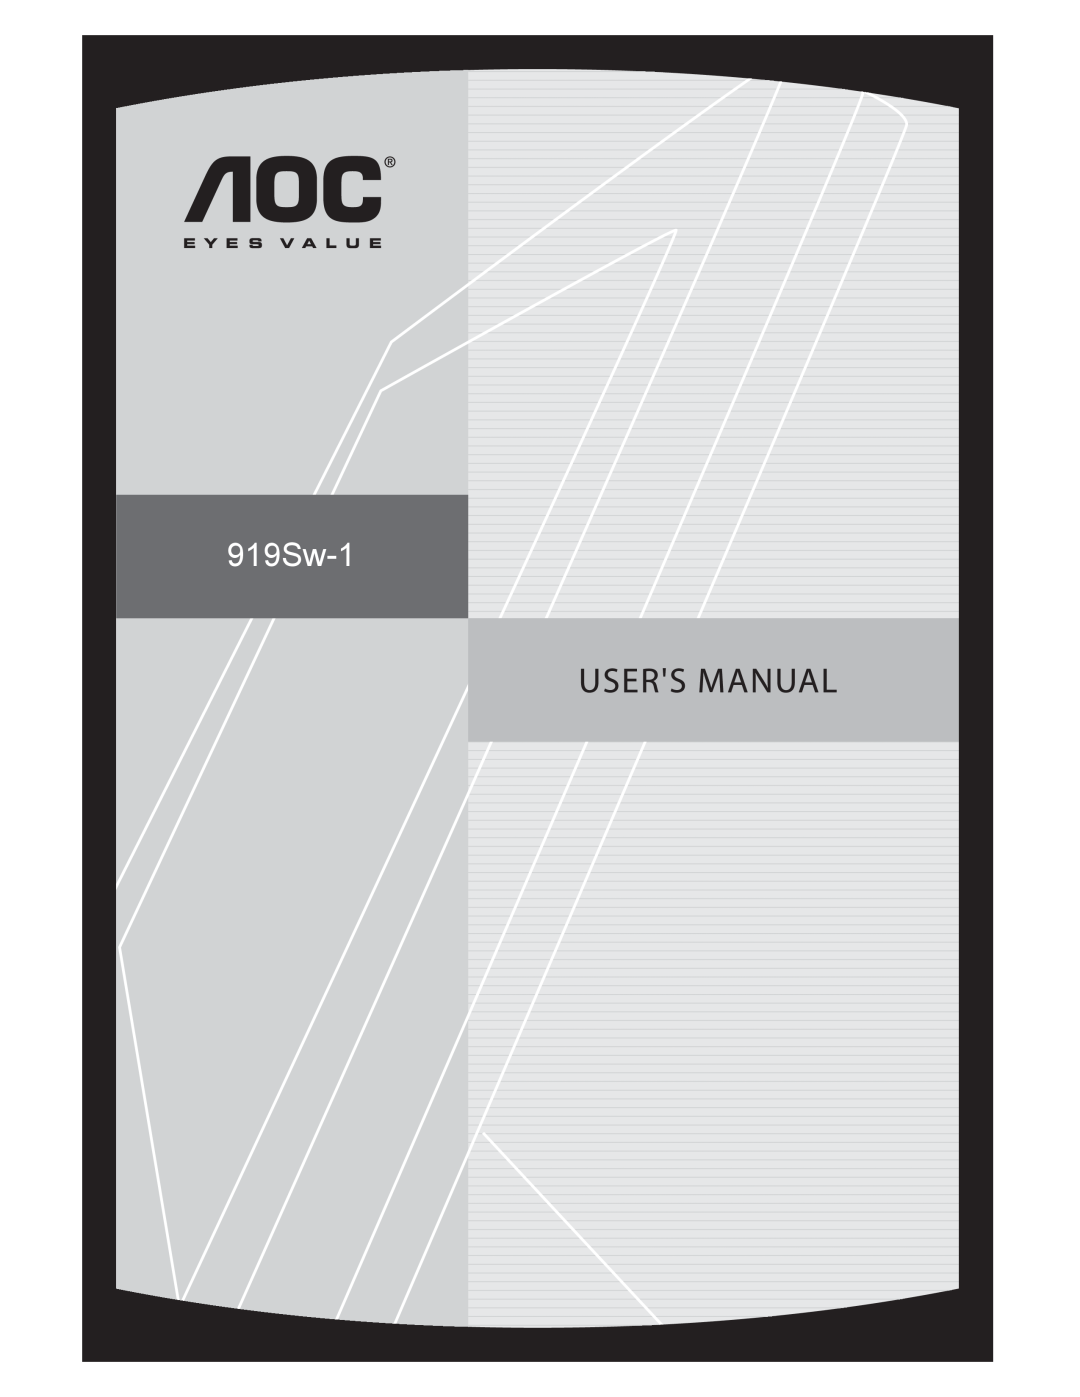 AOC 919Sw-1 manual 